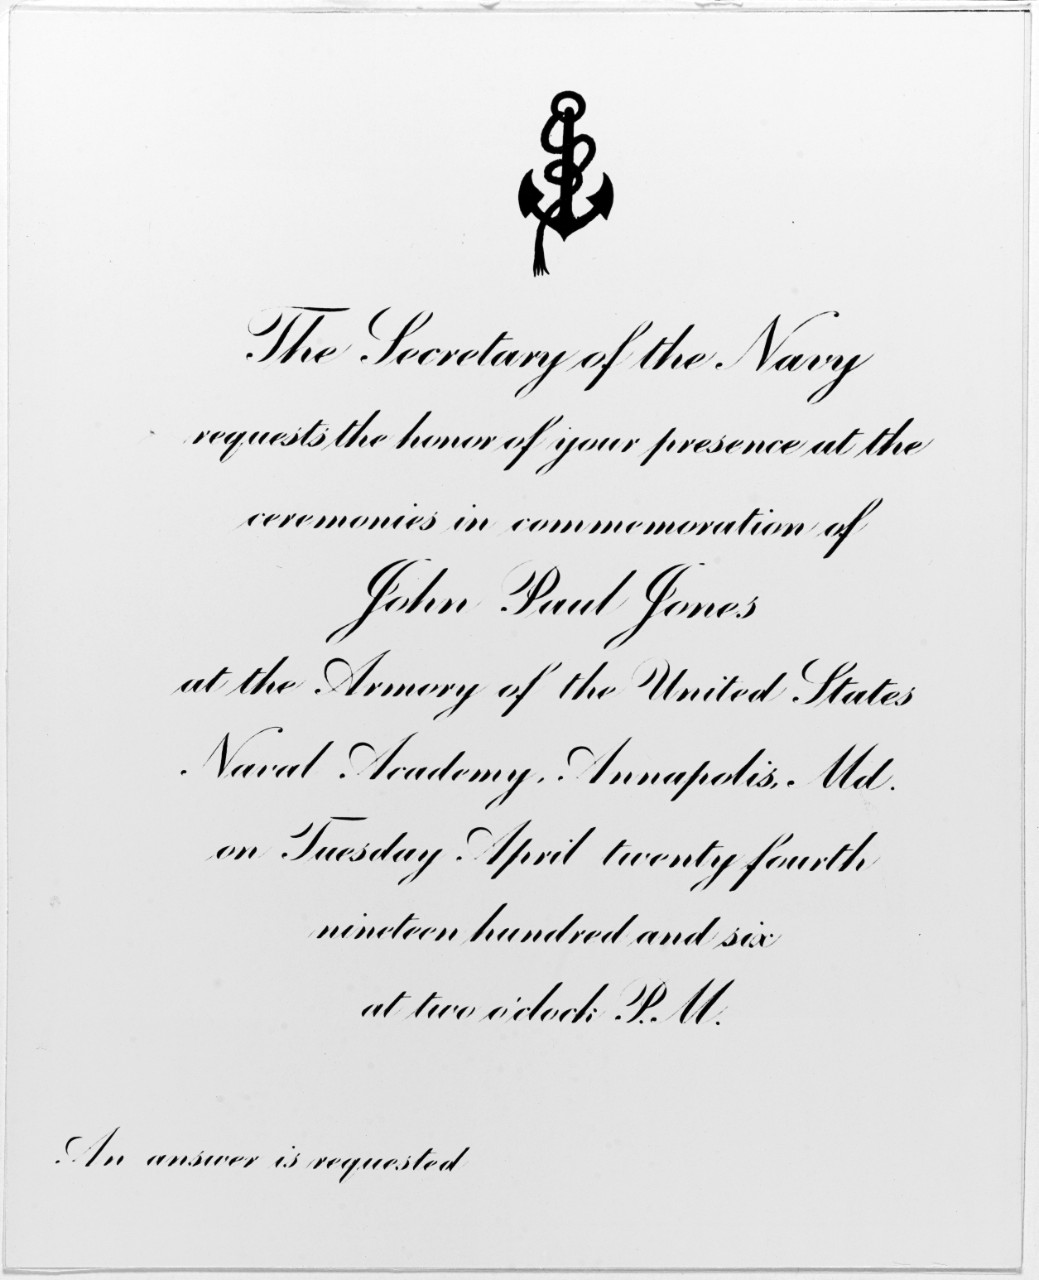 An invitation to the John Paul Jones ceremonies of 1906